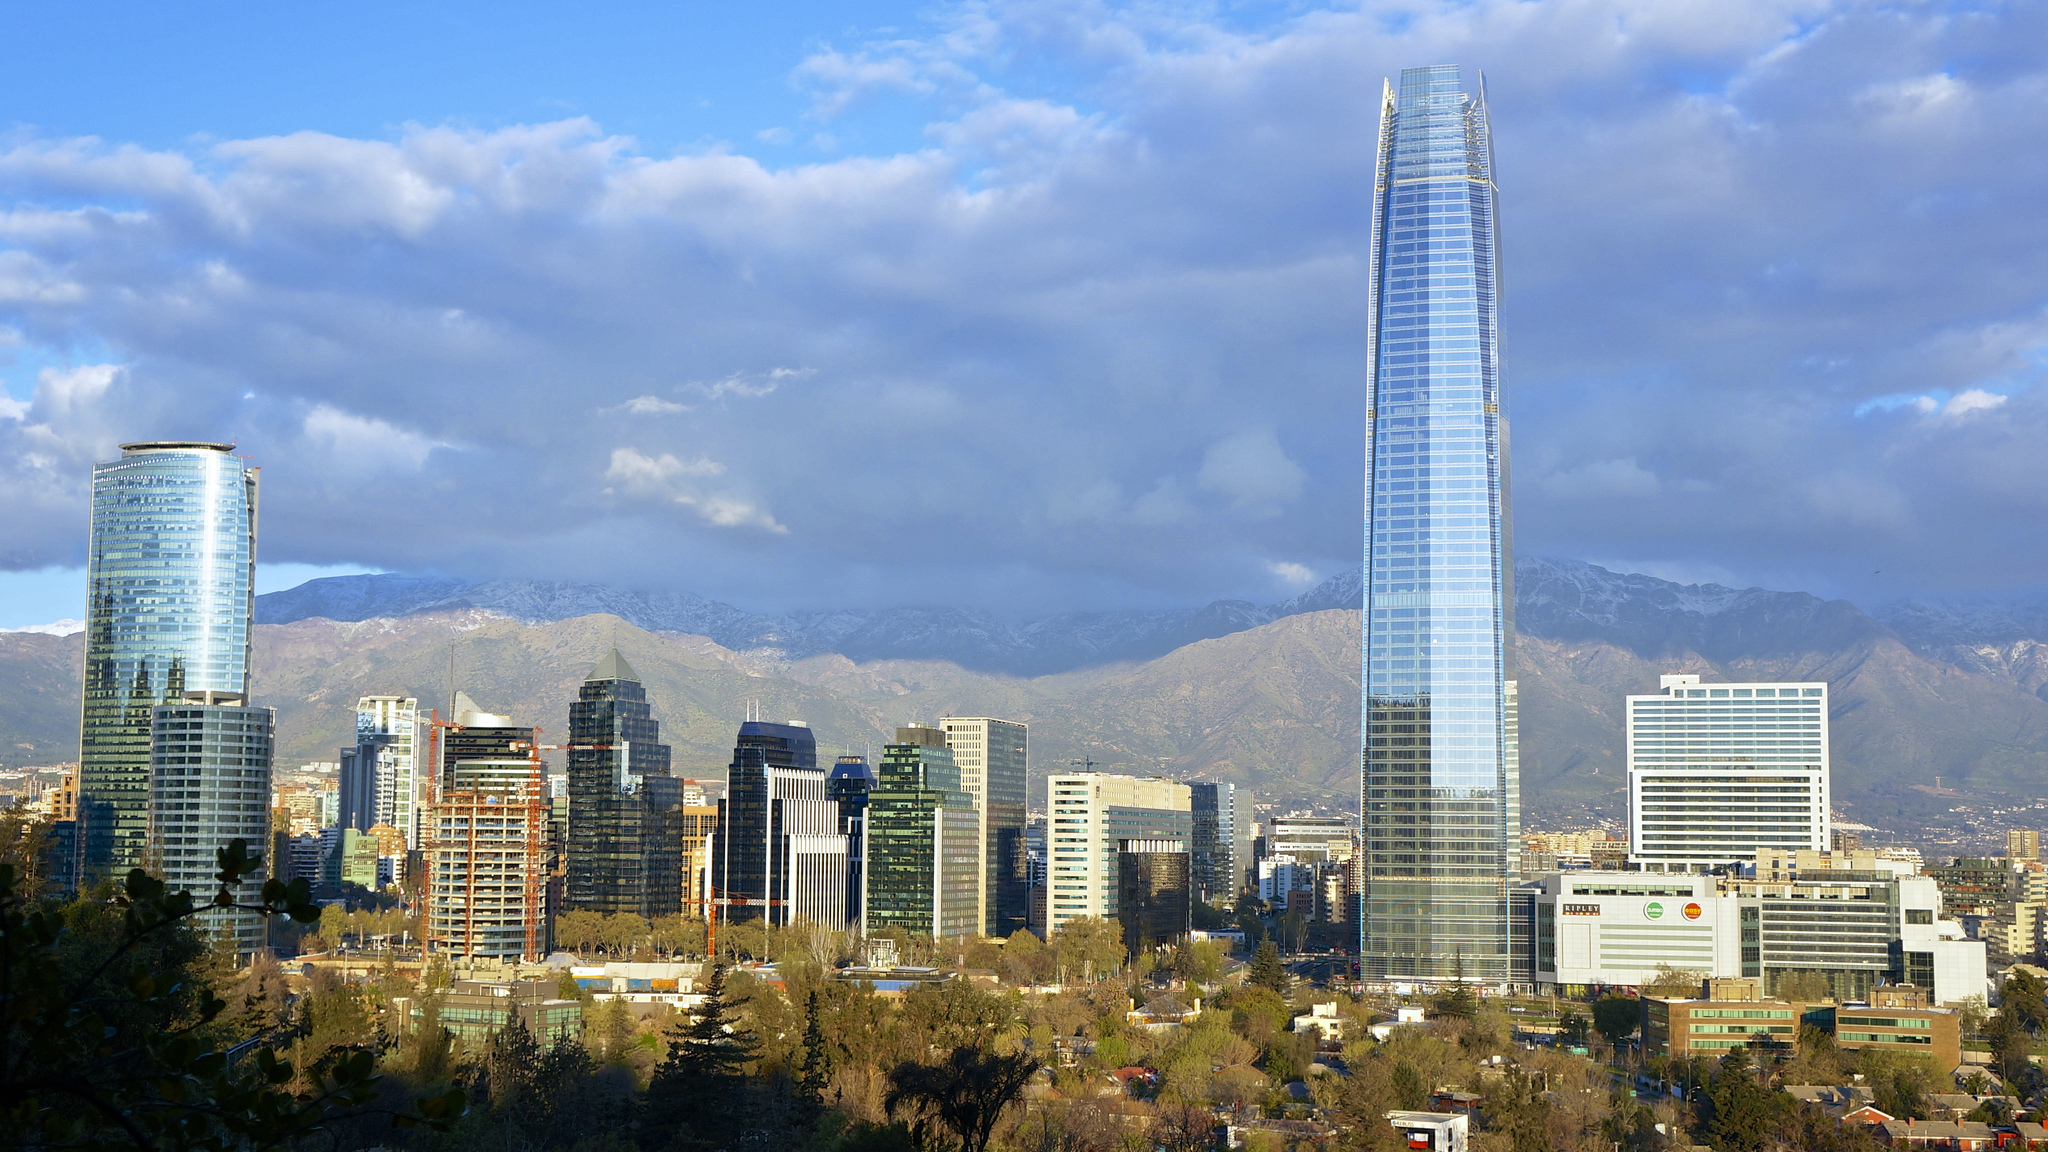 Santiago in Chile